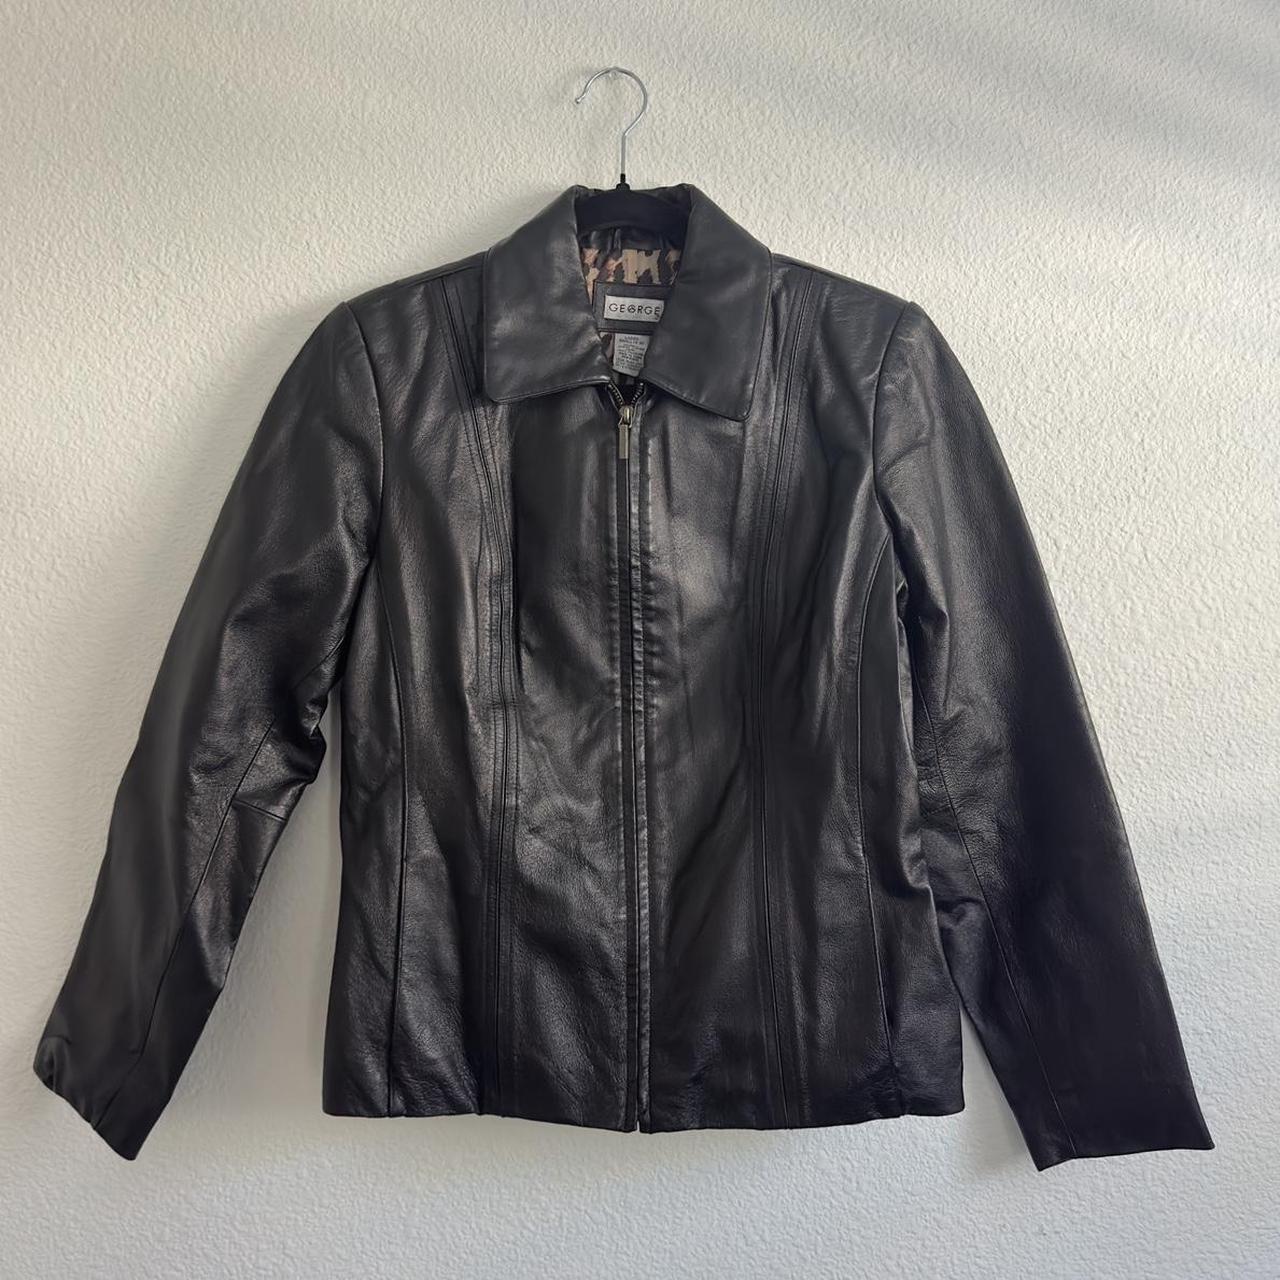 Black leather jacket genuine leather really cool... - Depop